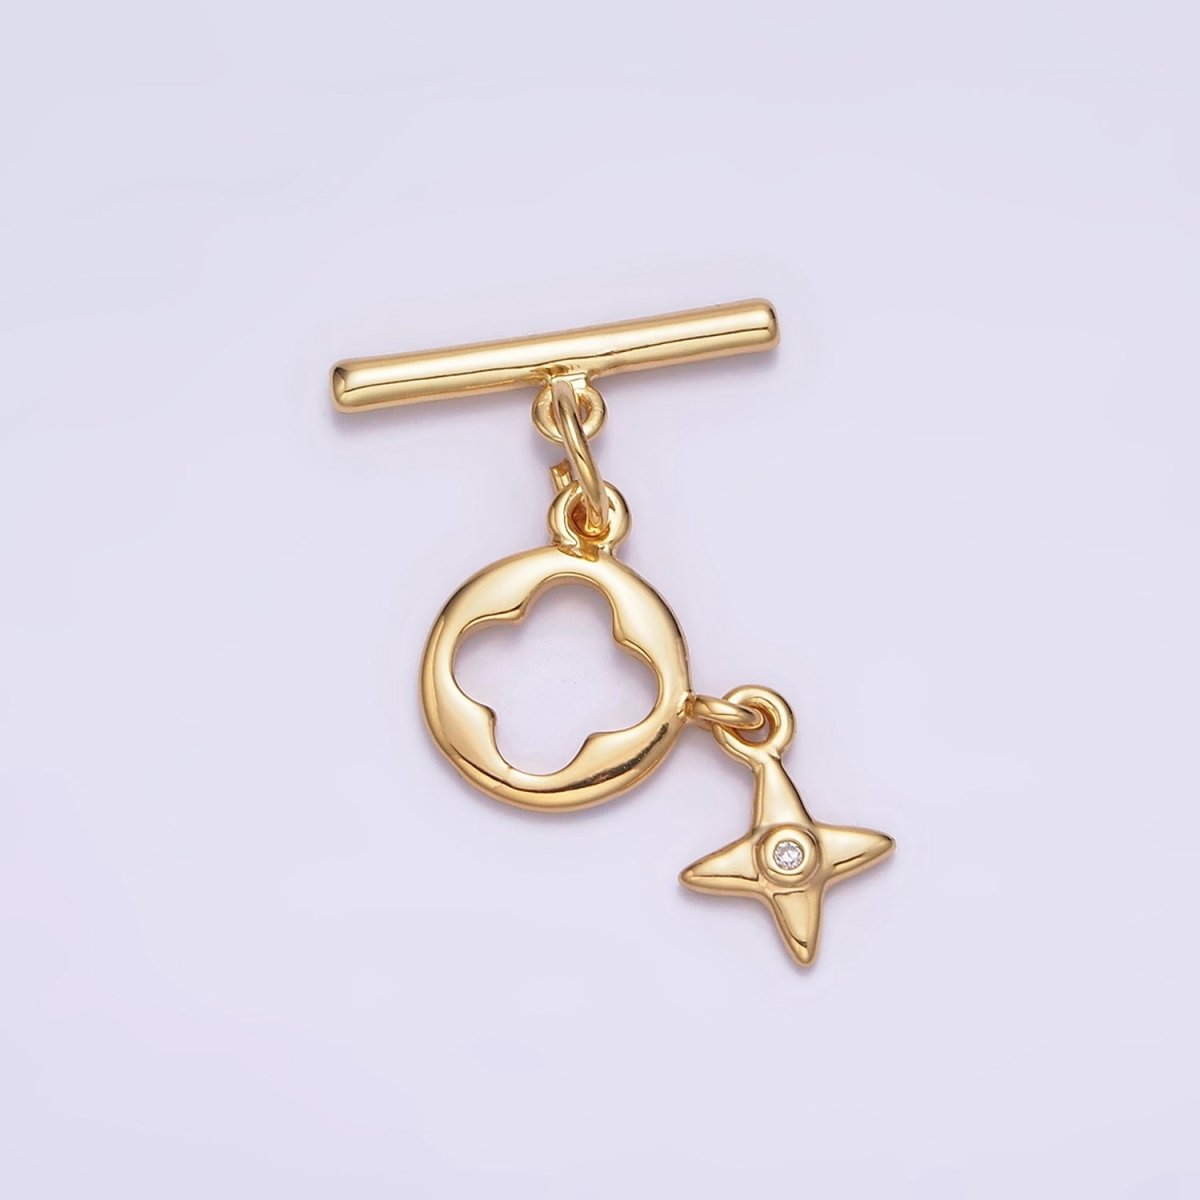 24K Gold Filled Open Quatrefoil Star Drop OT Toggle Clasps Closure Jewelry Making Supply | Z-446 - DLUXCA